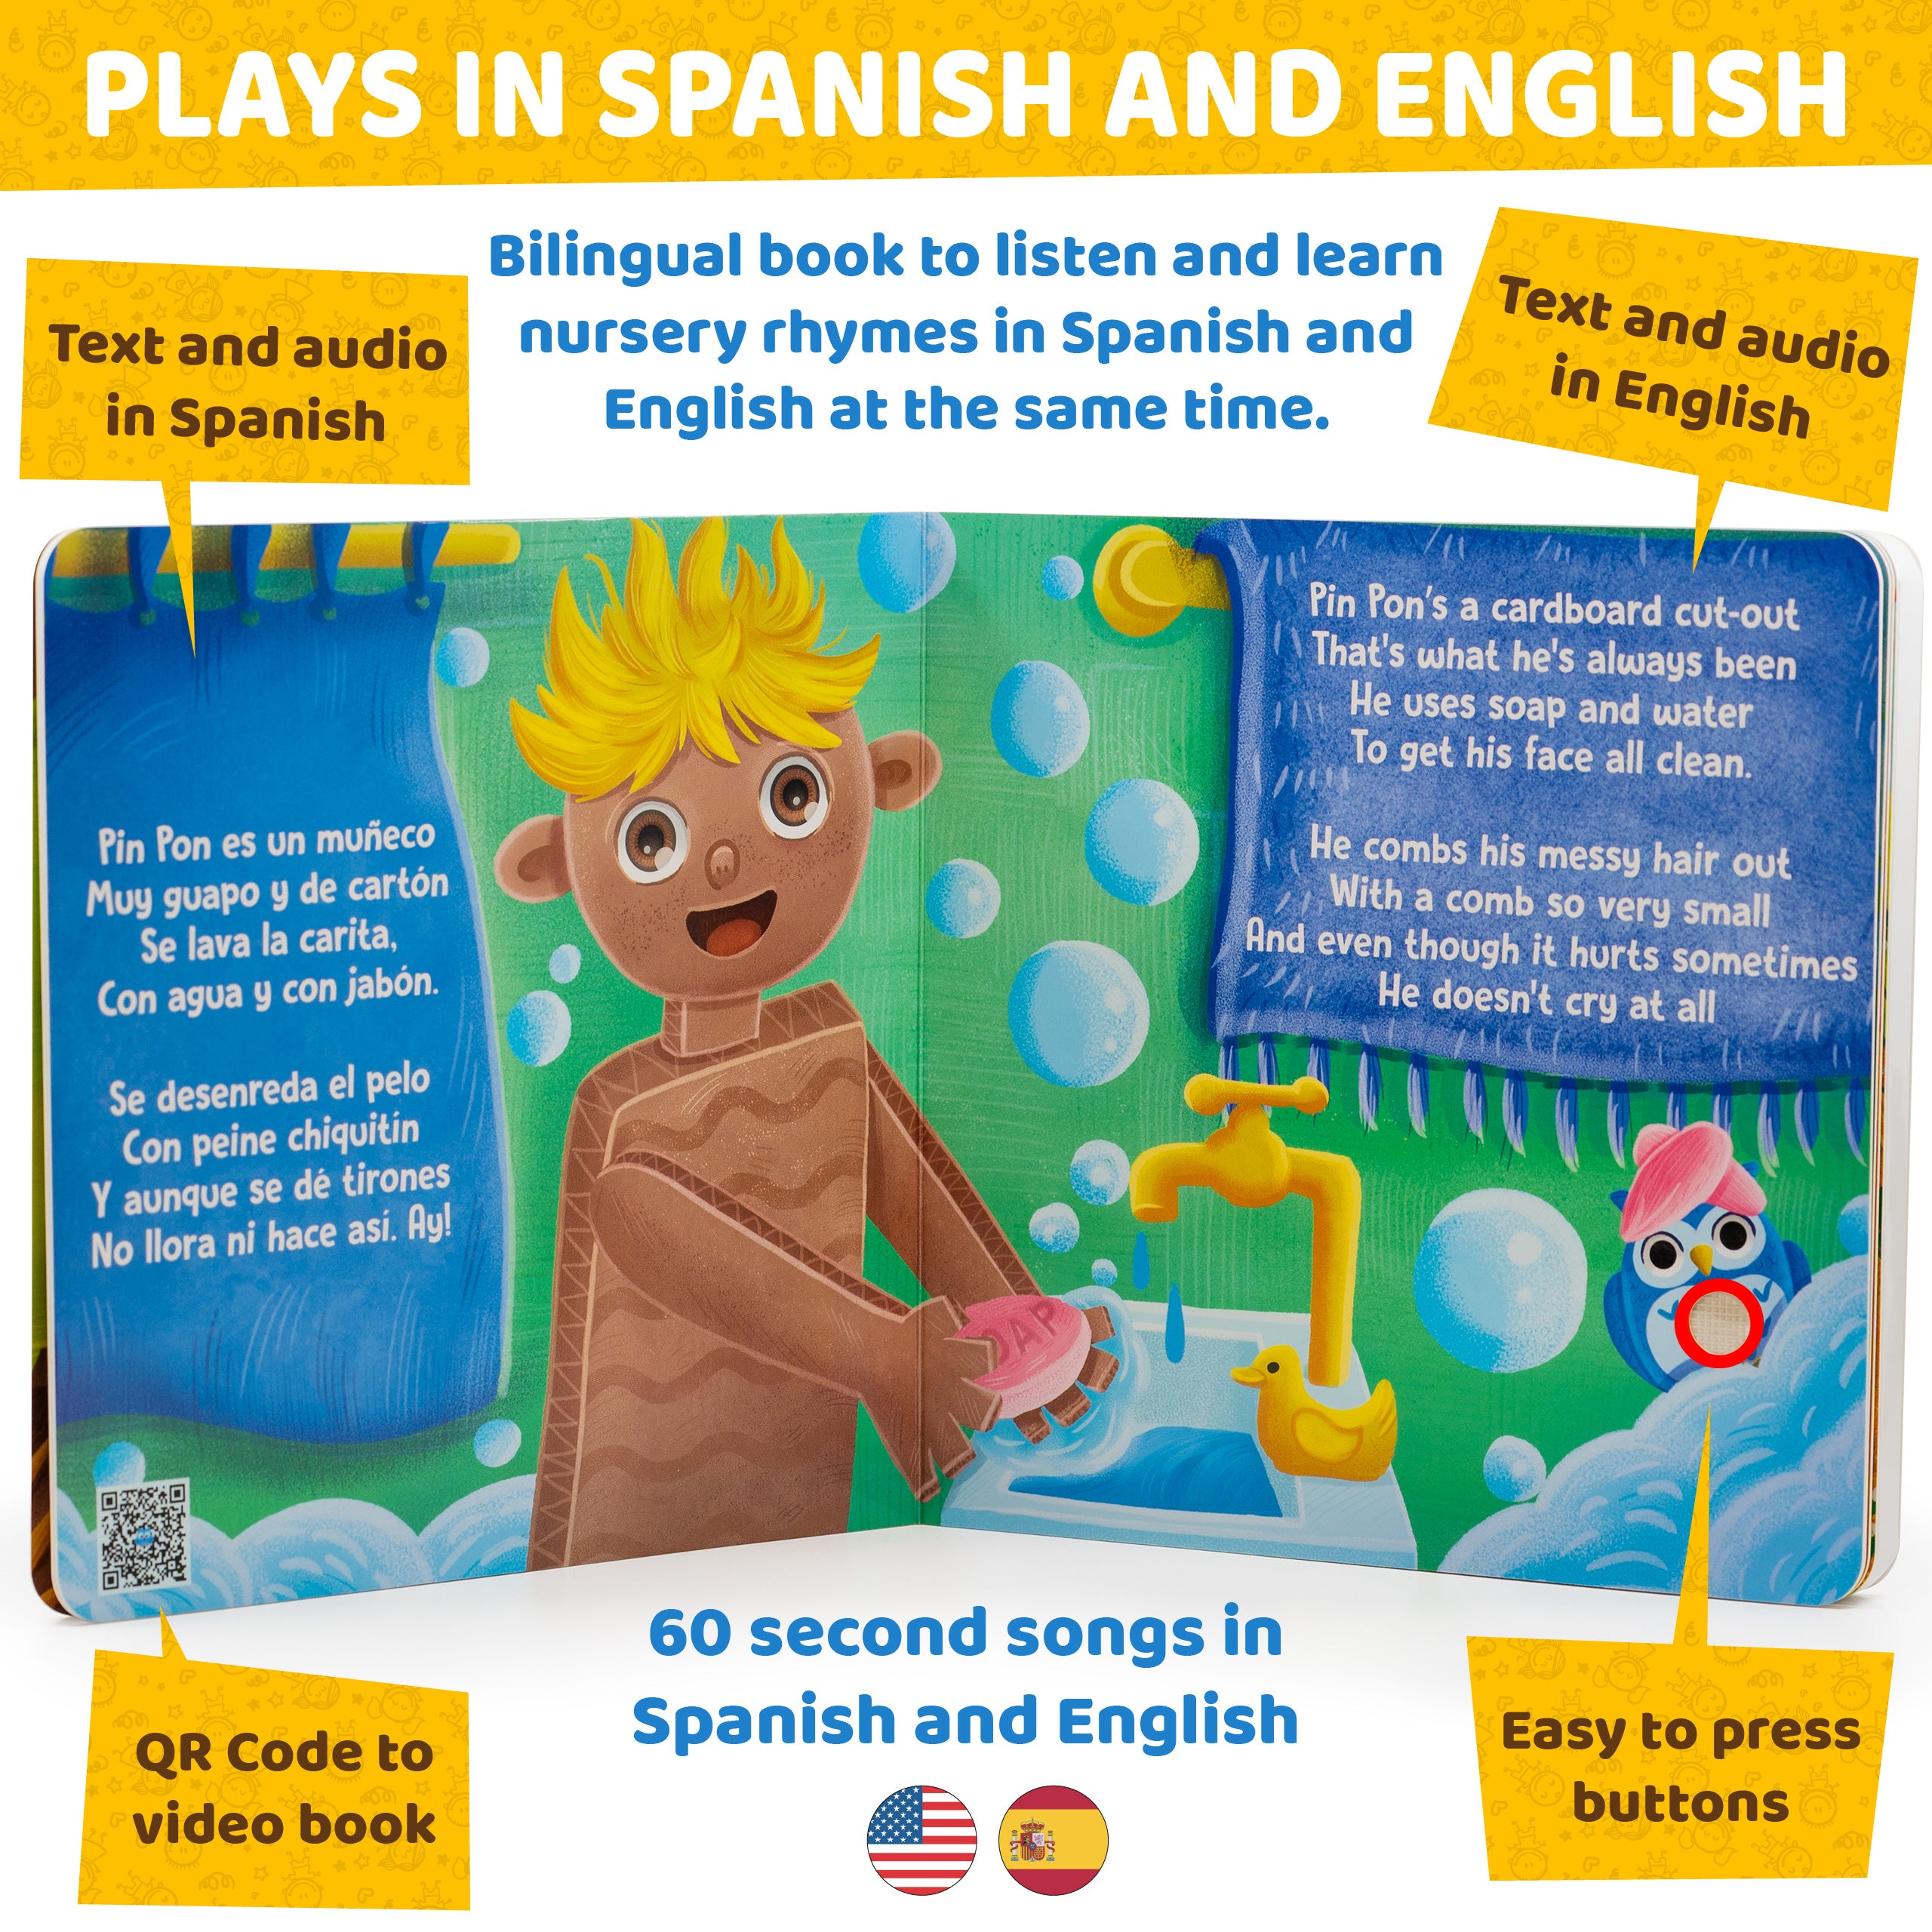 Typical Spanish Nursery Rhymes - Bilingual English & Spanish Sound Book - Gufino Bilingual Learning